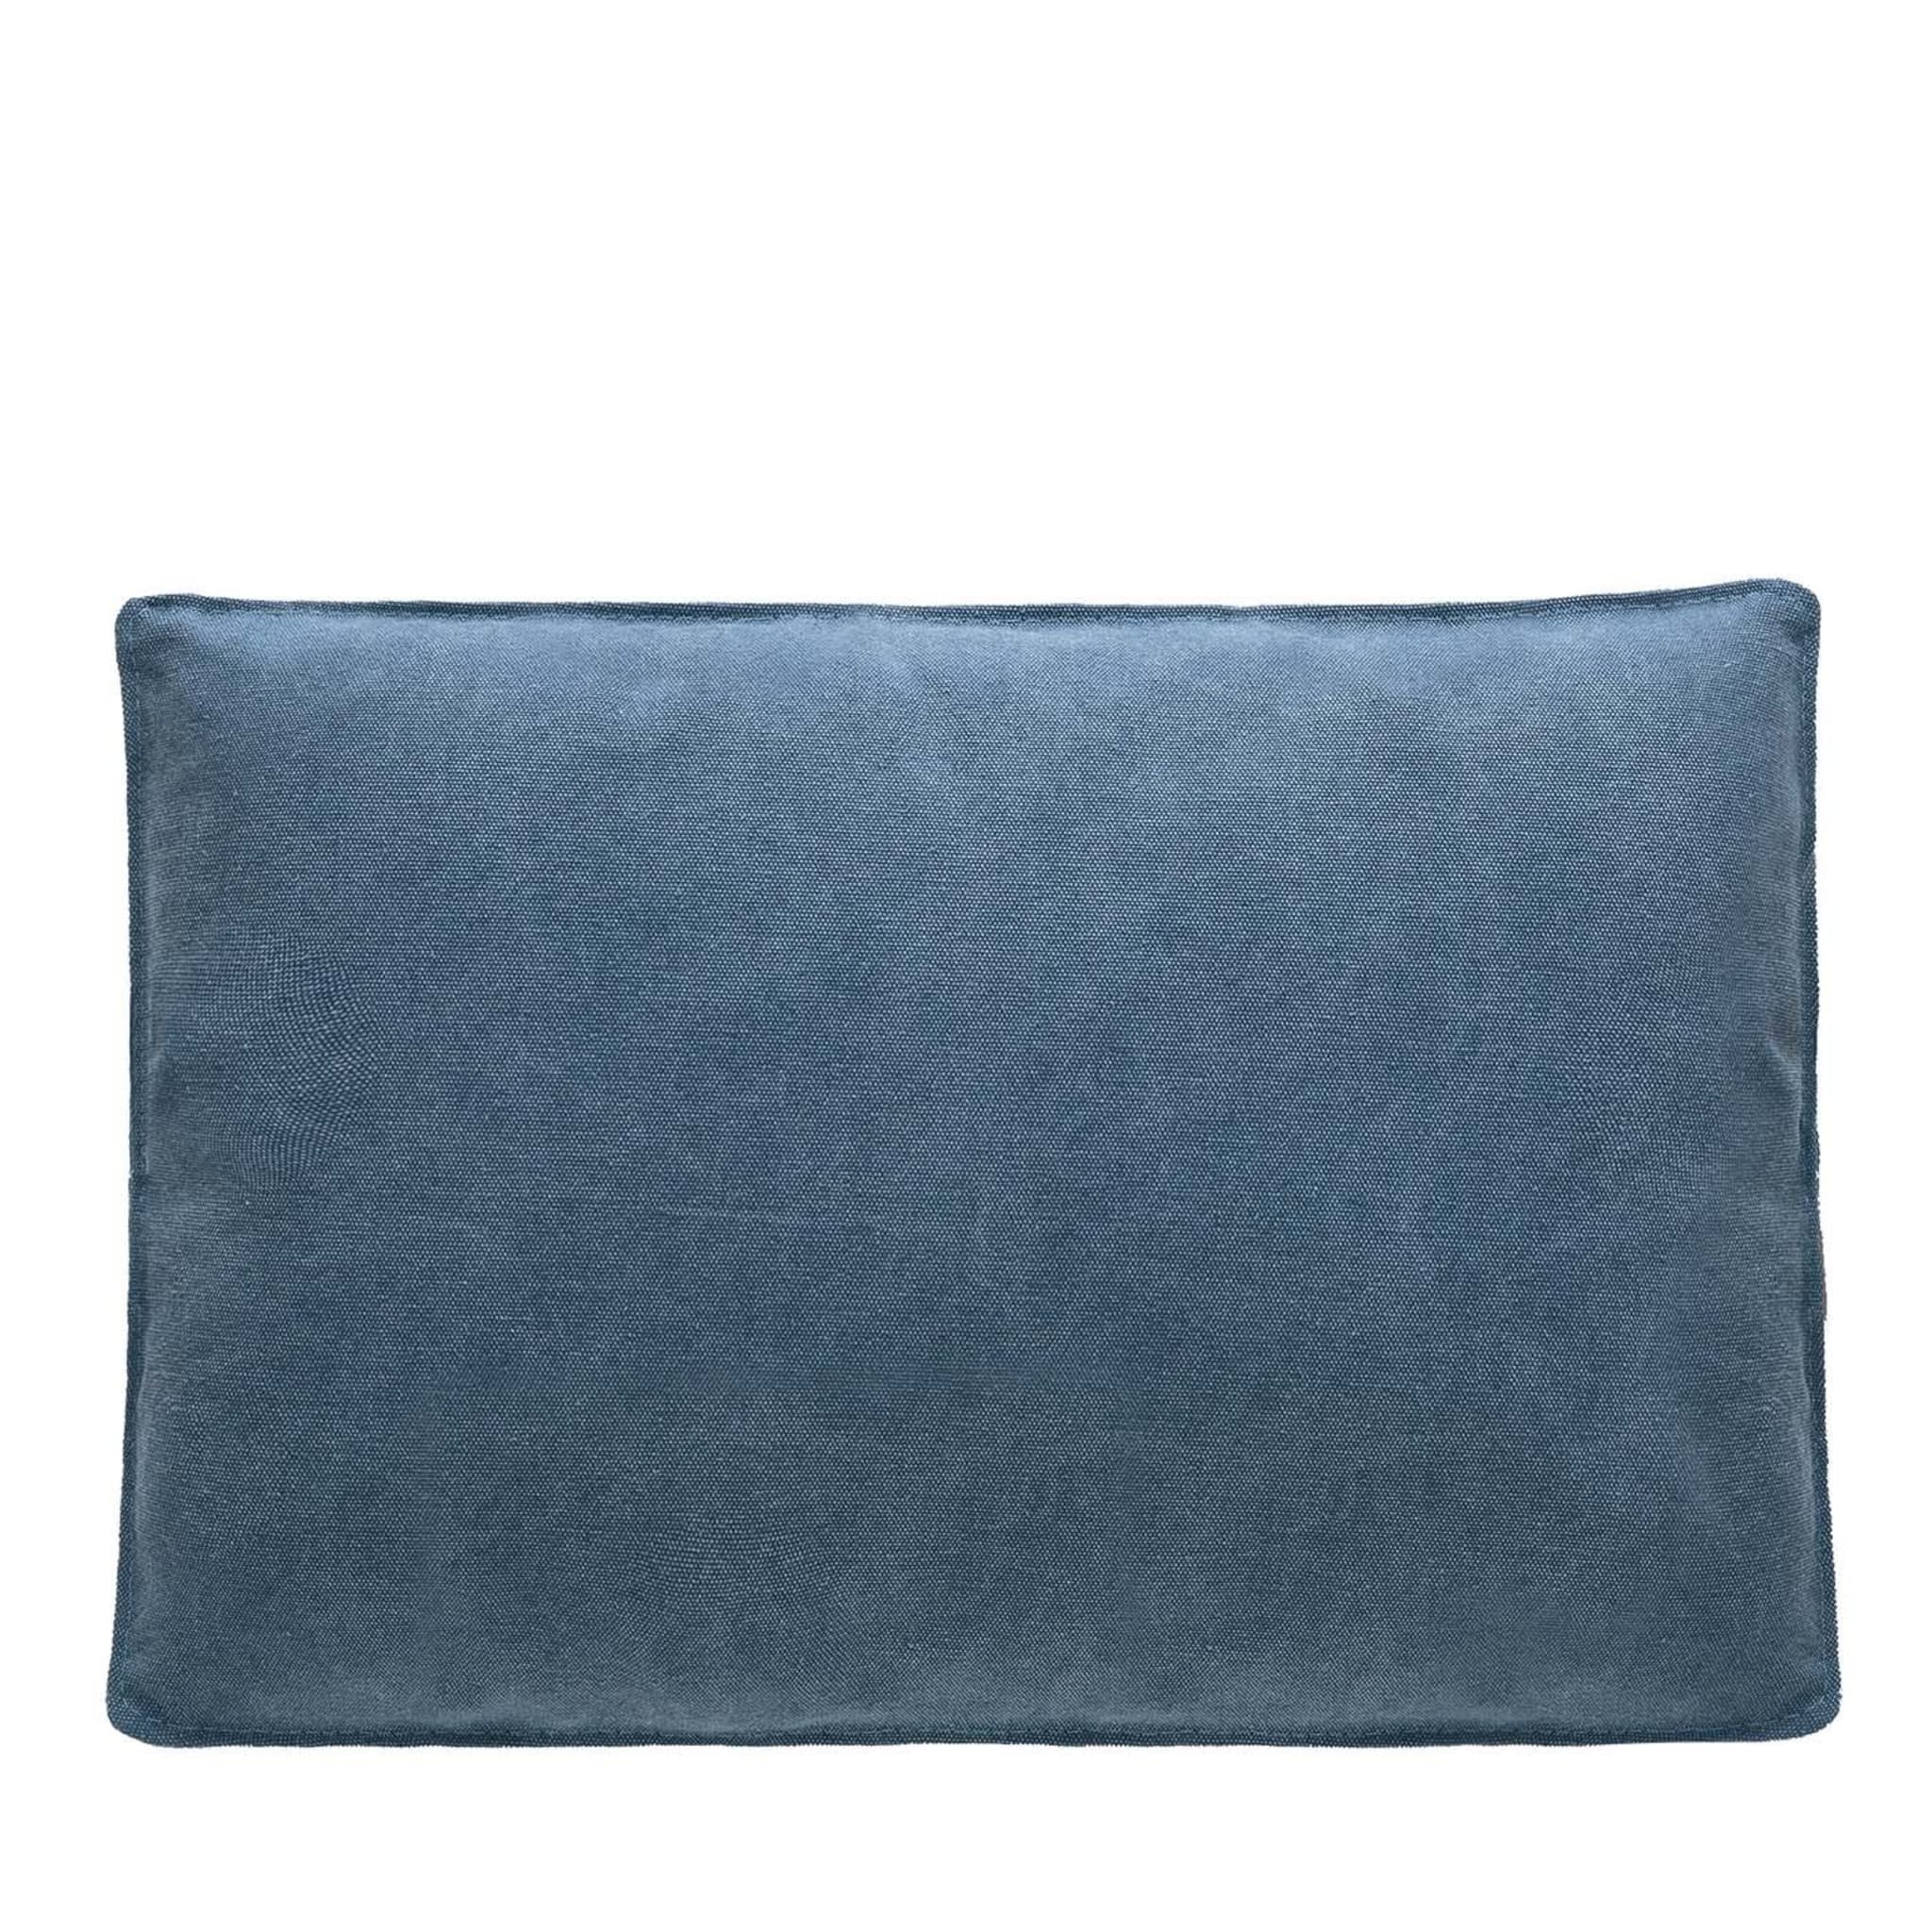 Clara Blue Rectangular Cushion - Main view